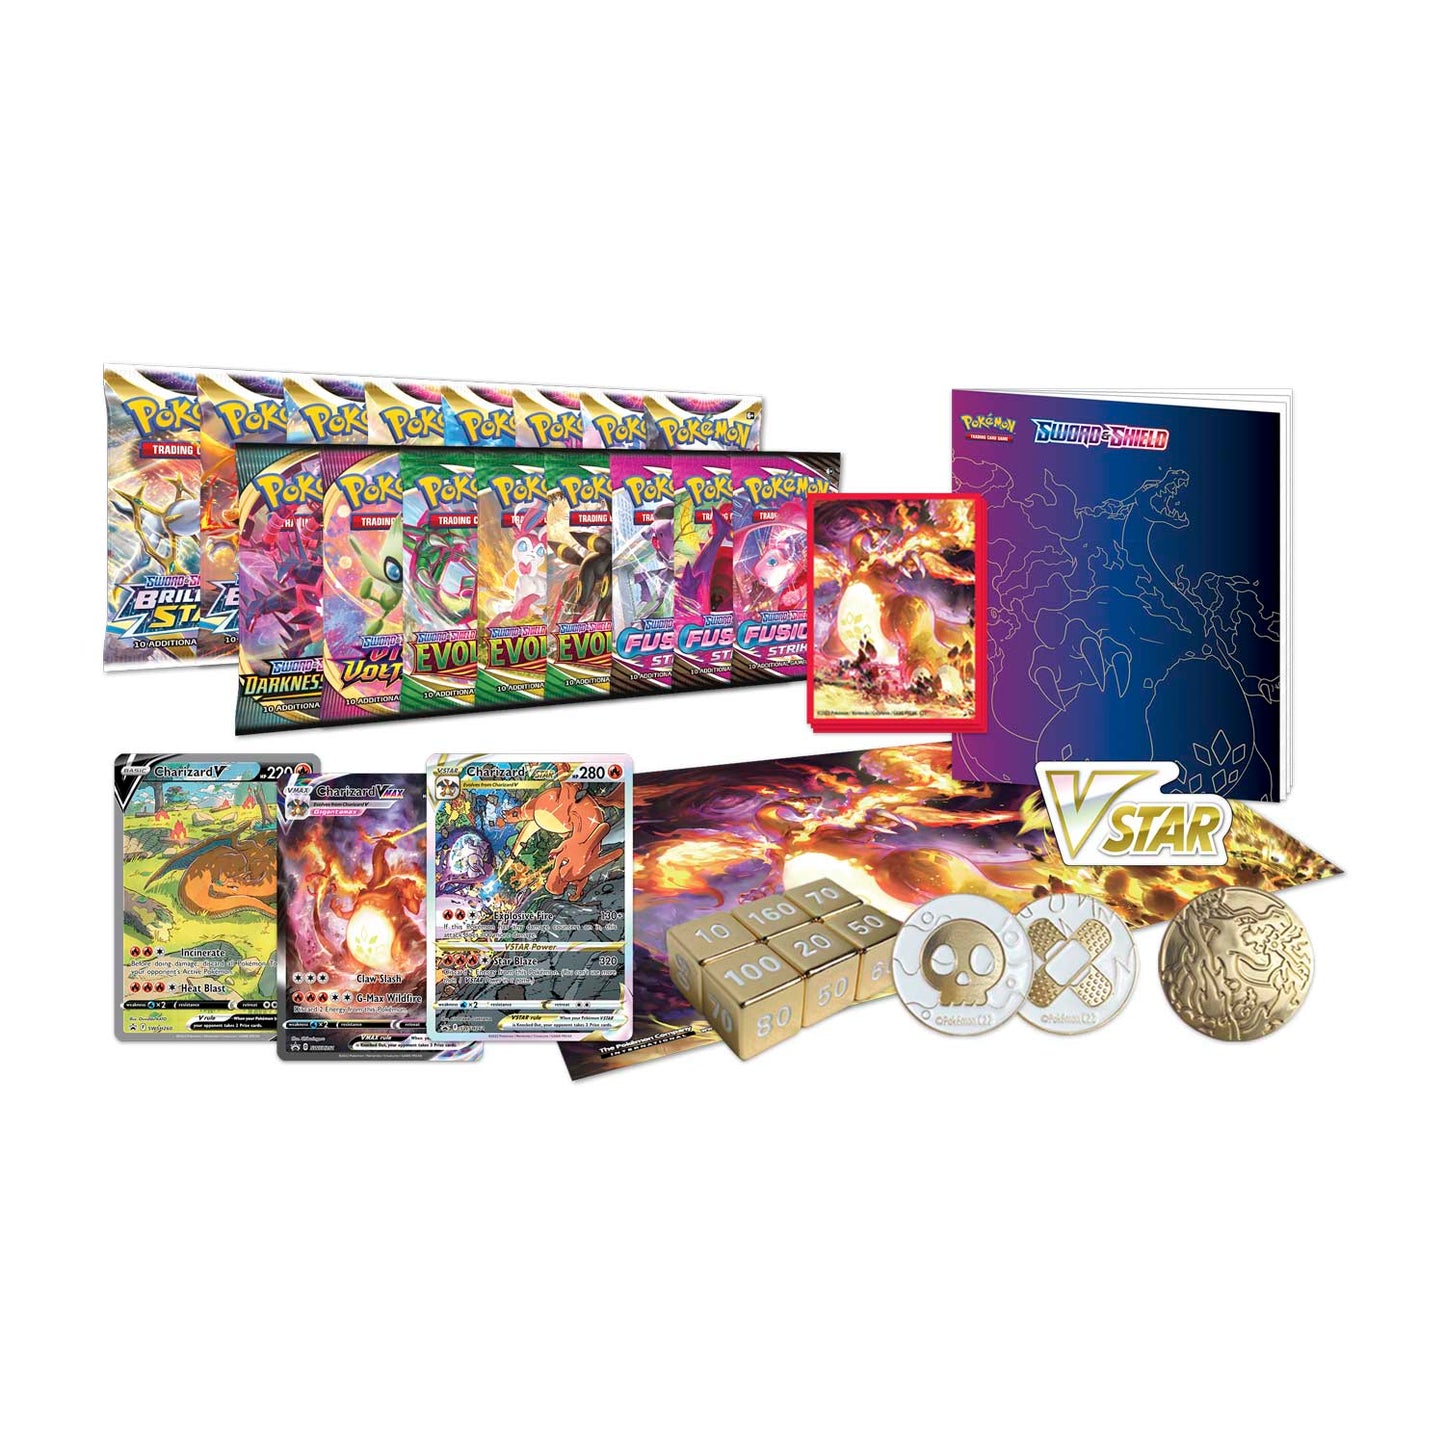 Pokémon TCG: Sword & Shield Ultra-Premium Collection (Charizard)